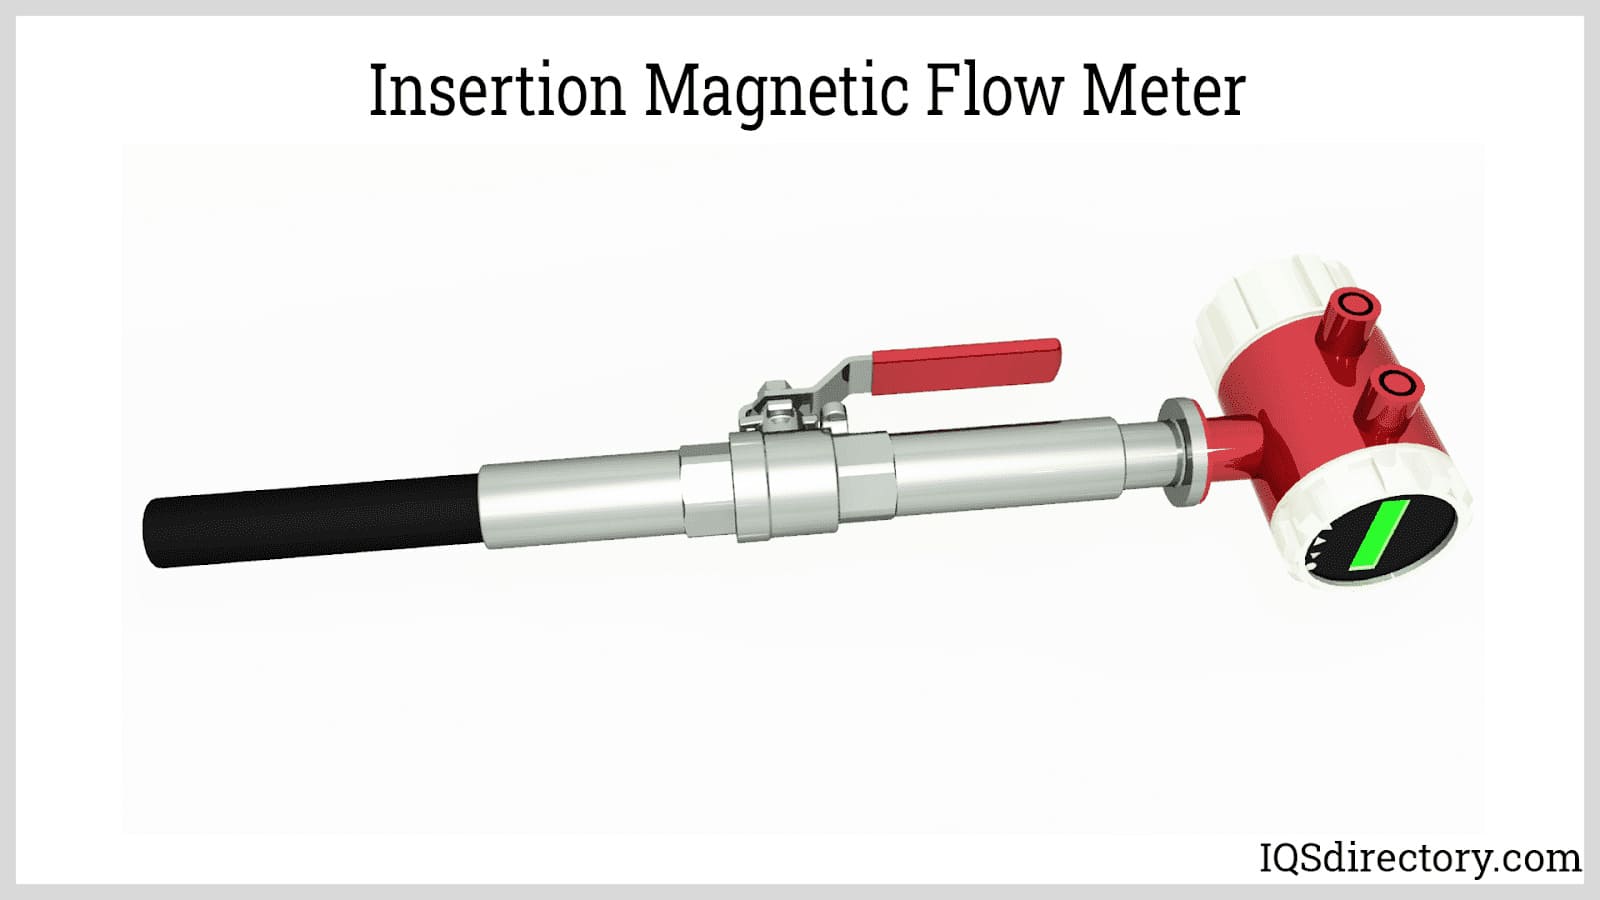 Insertion Magnetic Flow Meter